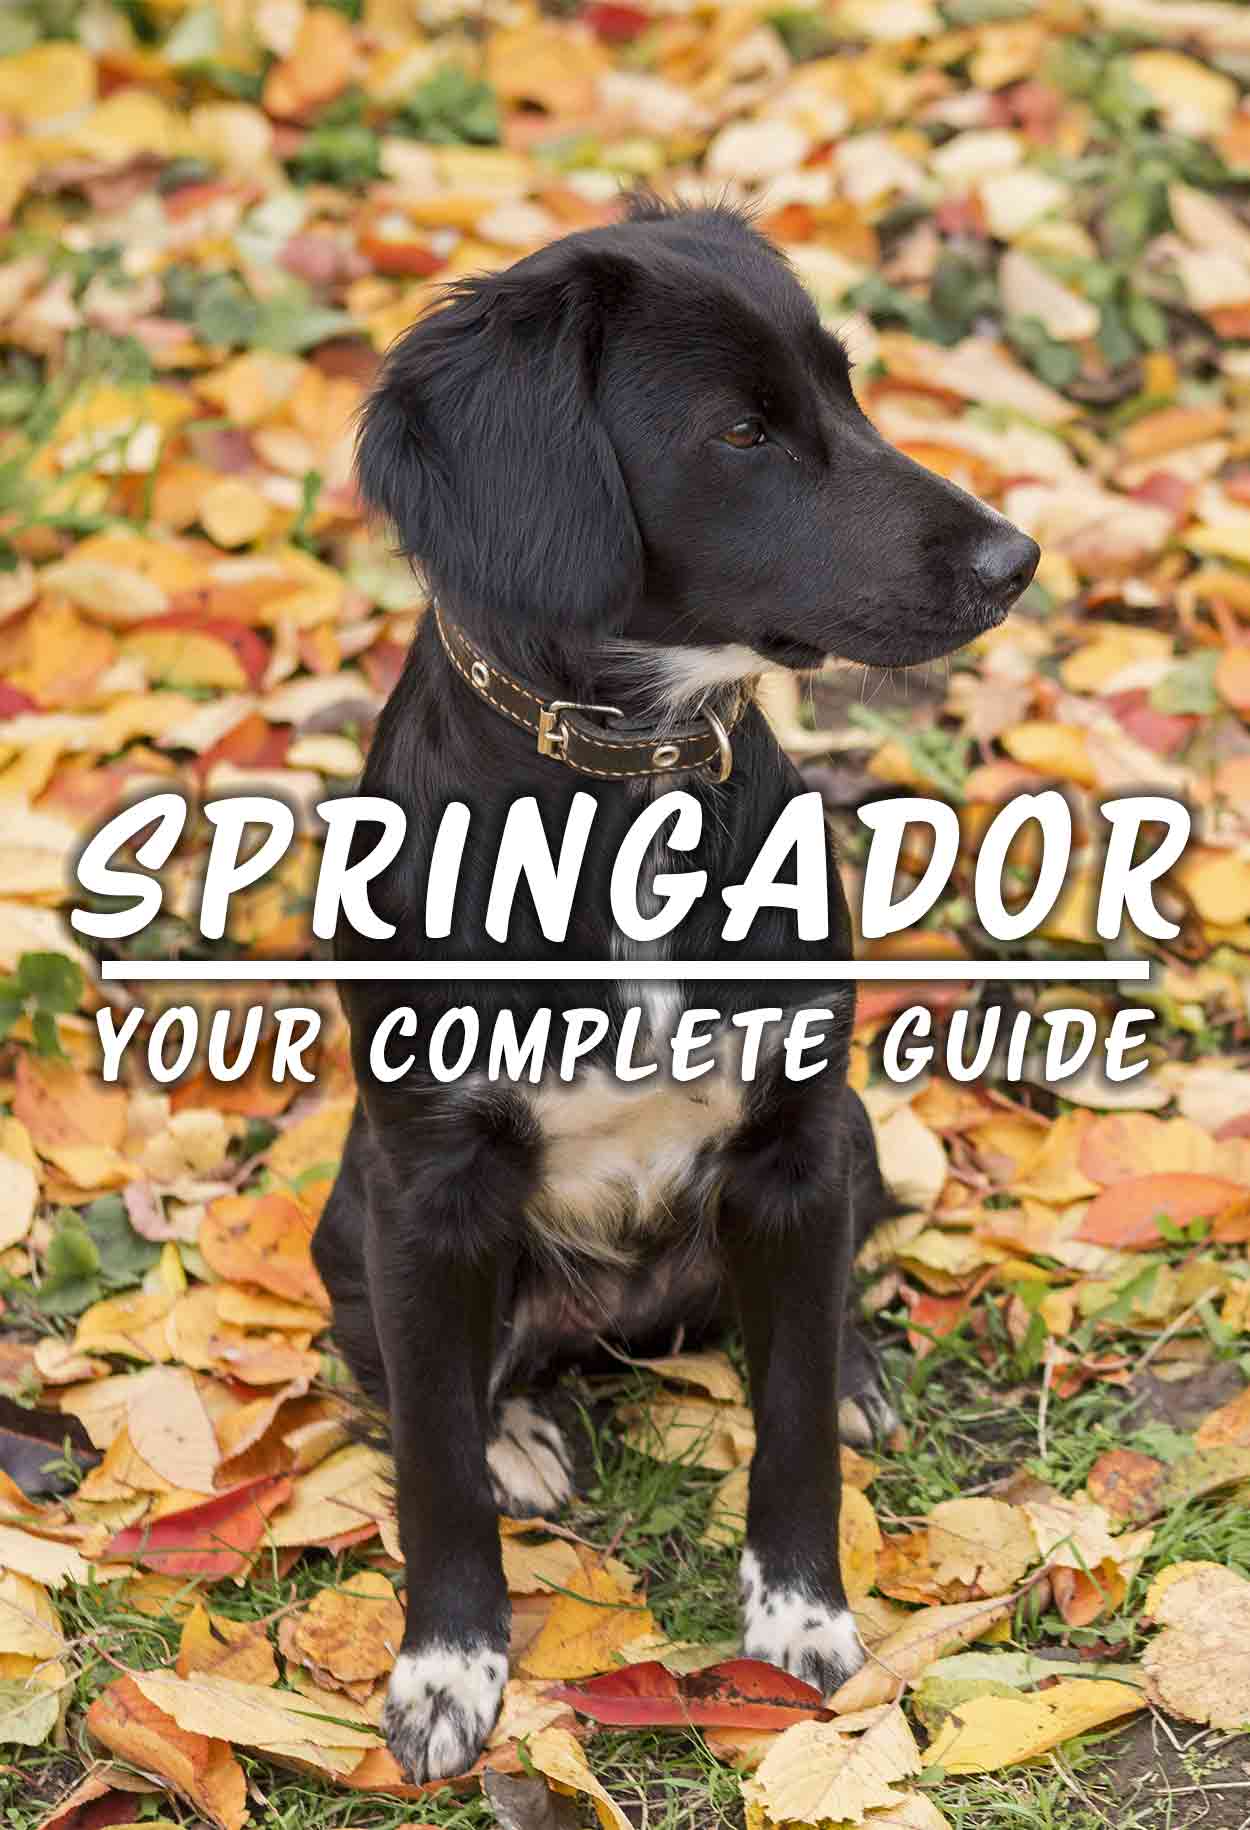 Springador, Uw Complete Gids - Hondenras overzicht